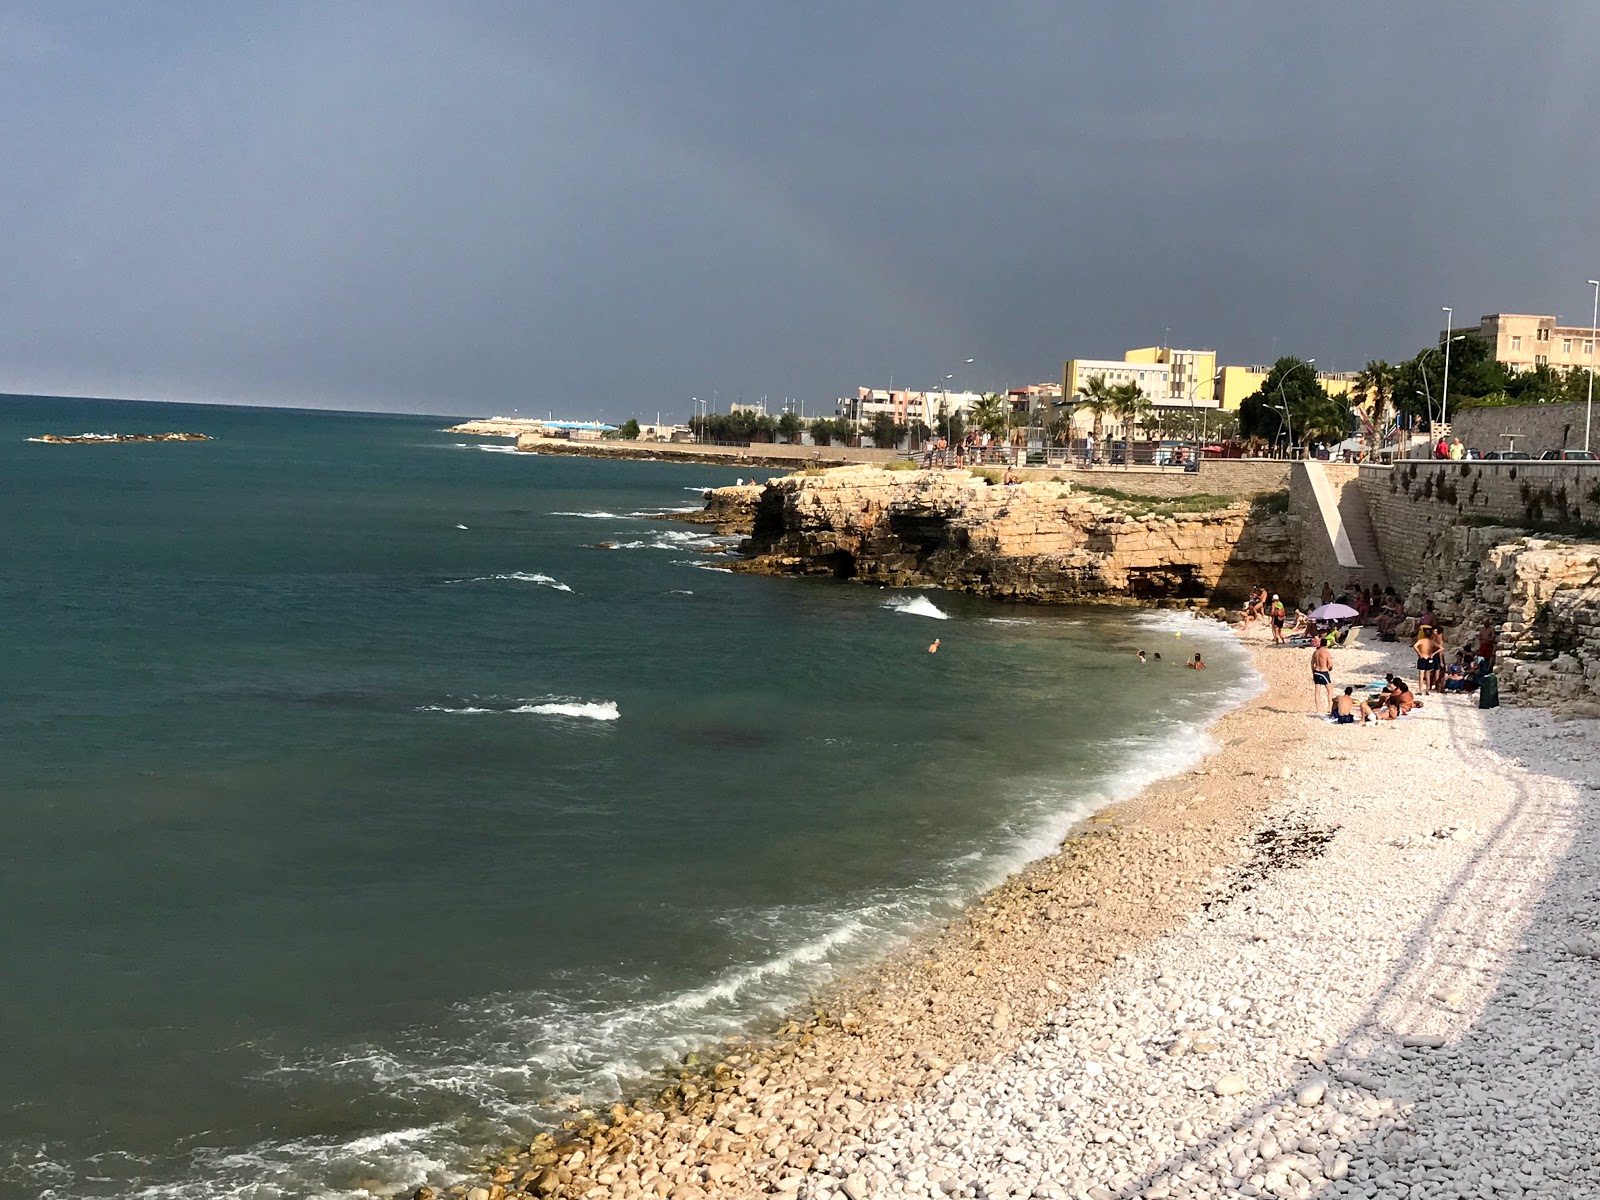 Foto von Spiaggia La Salata mit heller kies Oberfläche